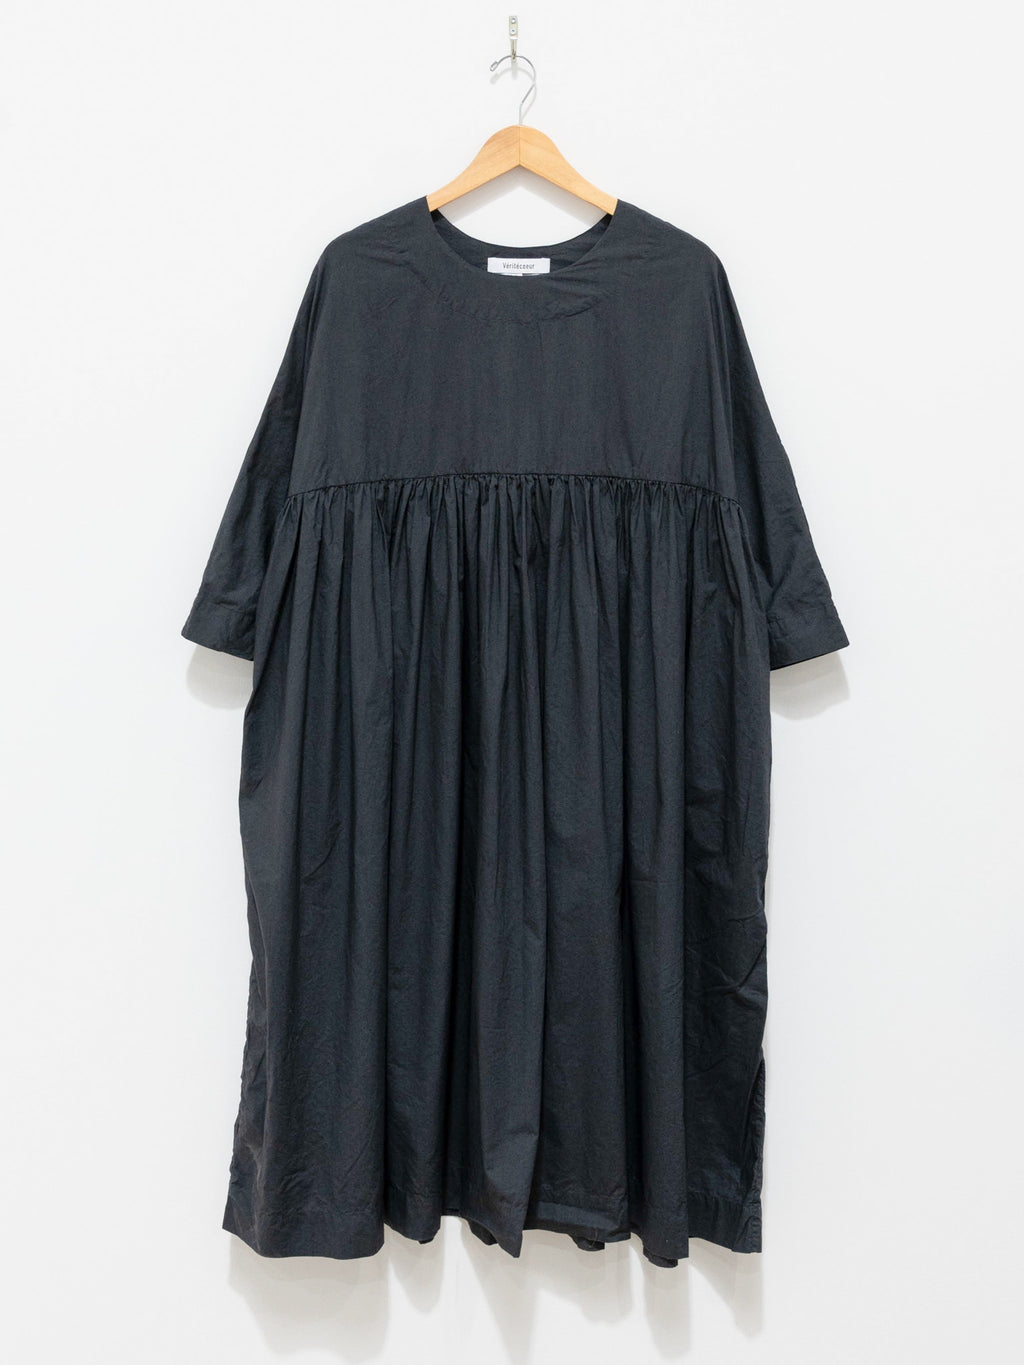 Namu Shop - Veritecoeur Gather Dress - Sumikuro